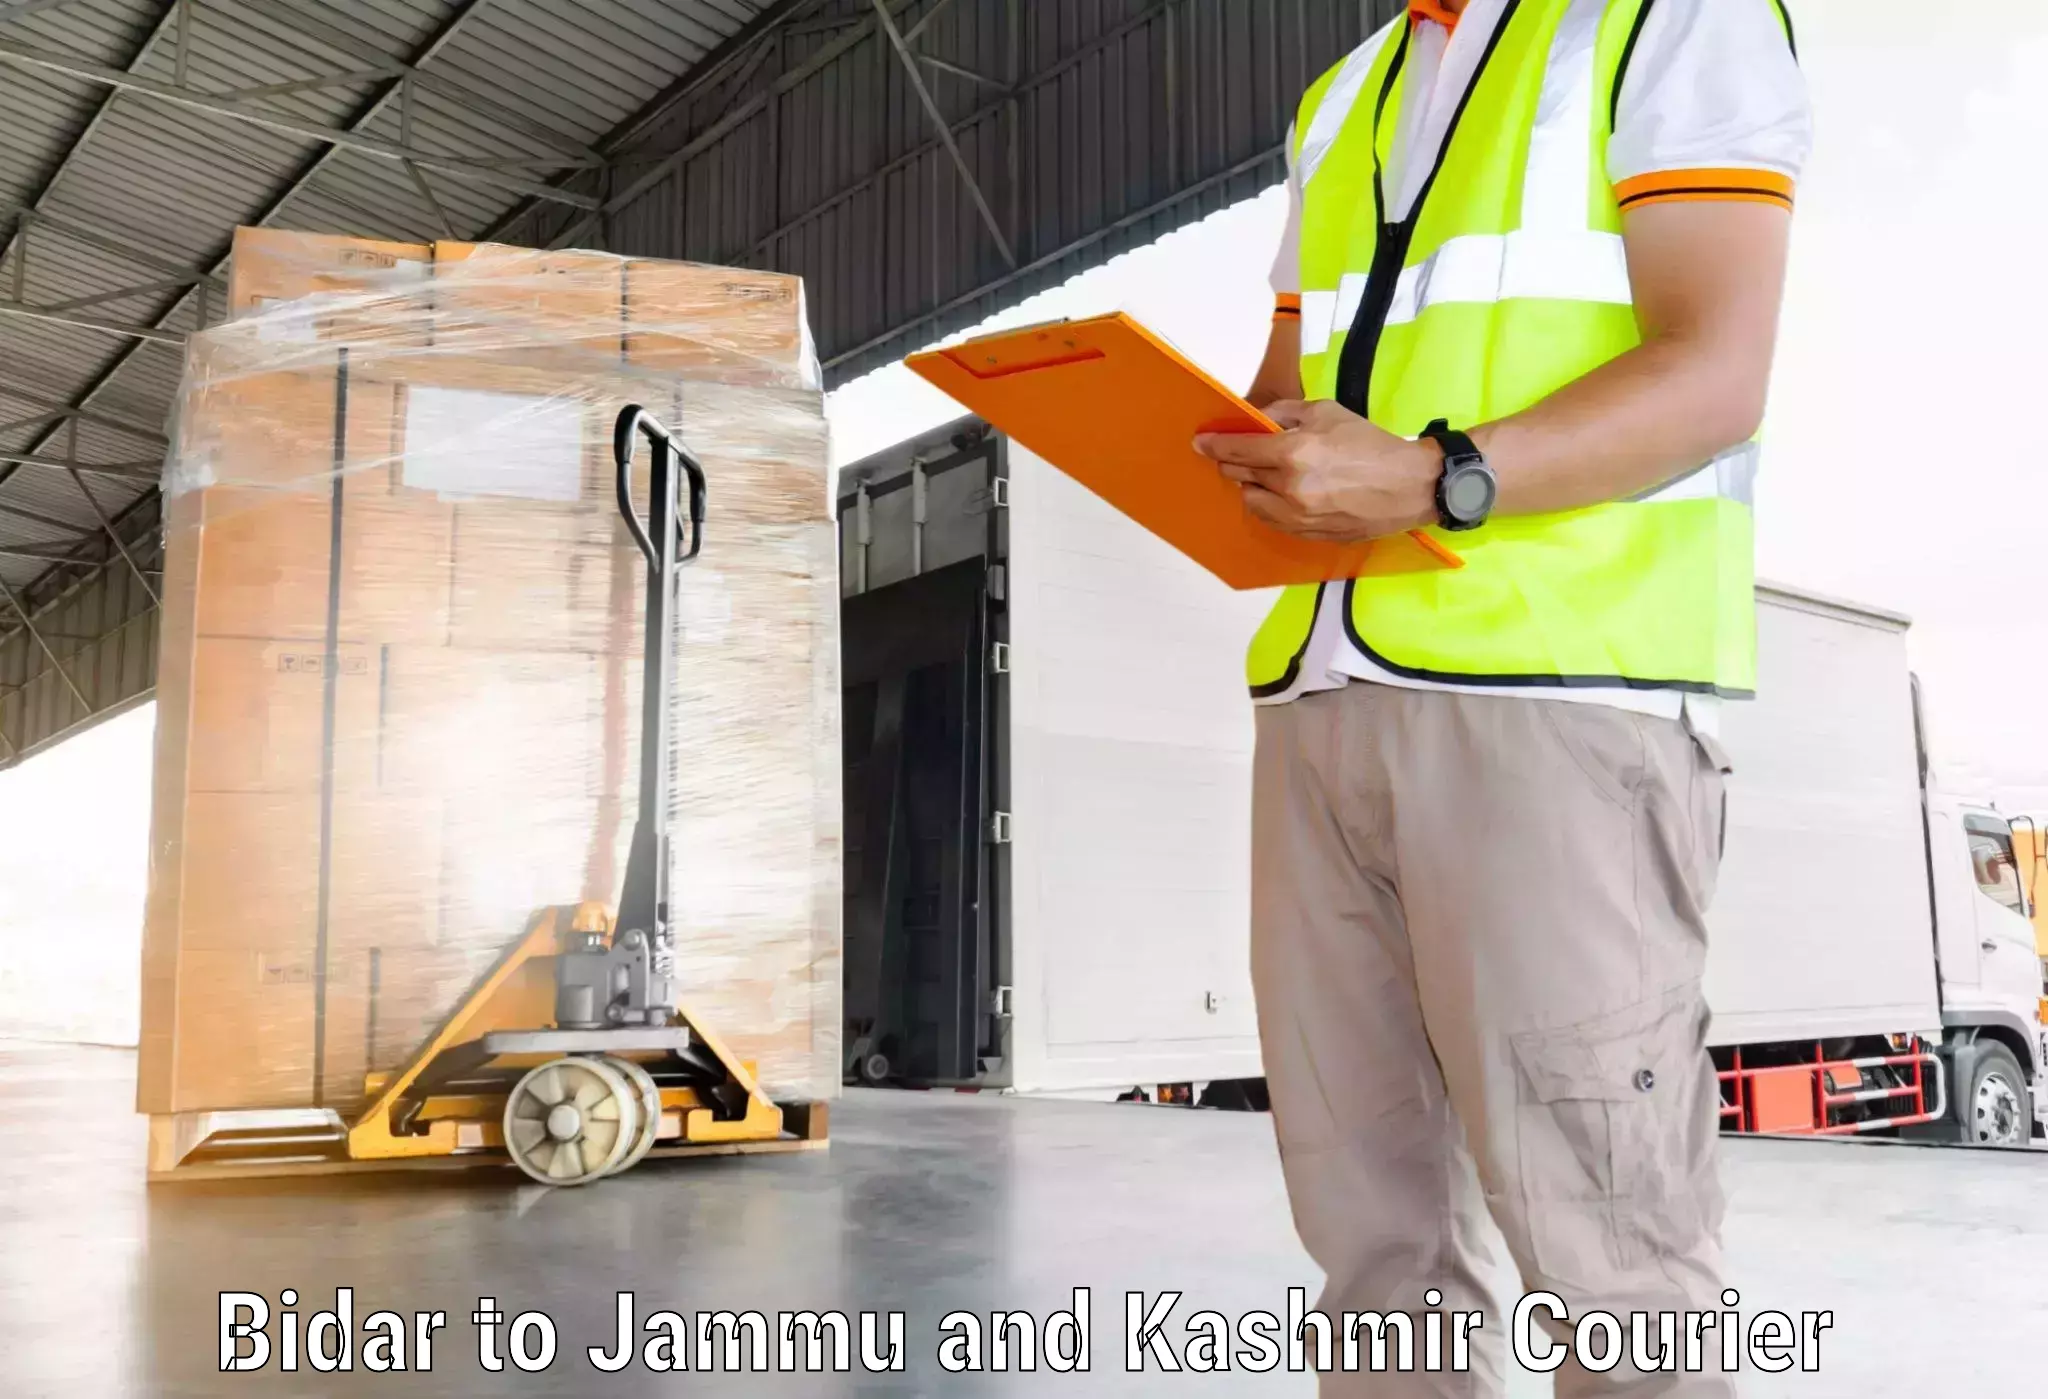 Logistics service provider Bidar to Jakh